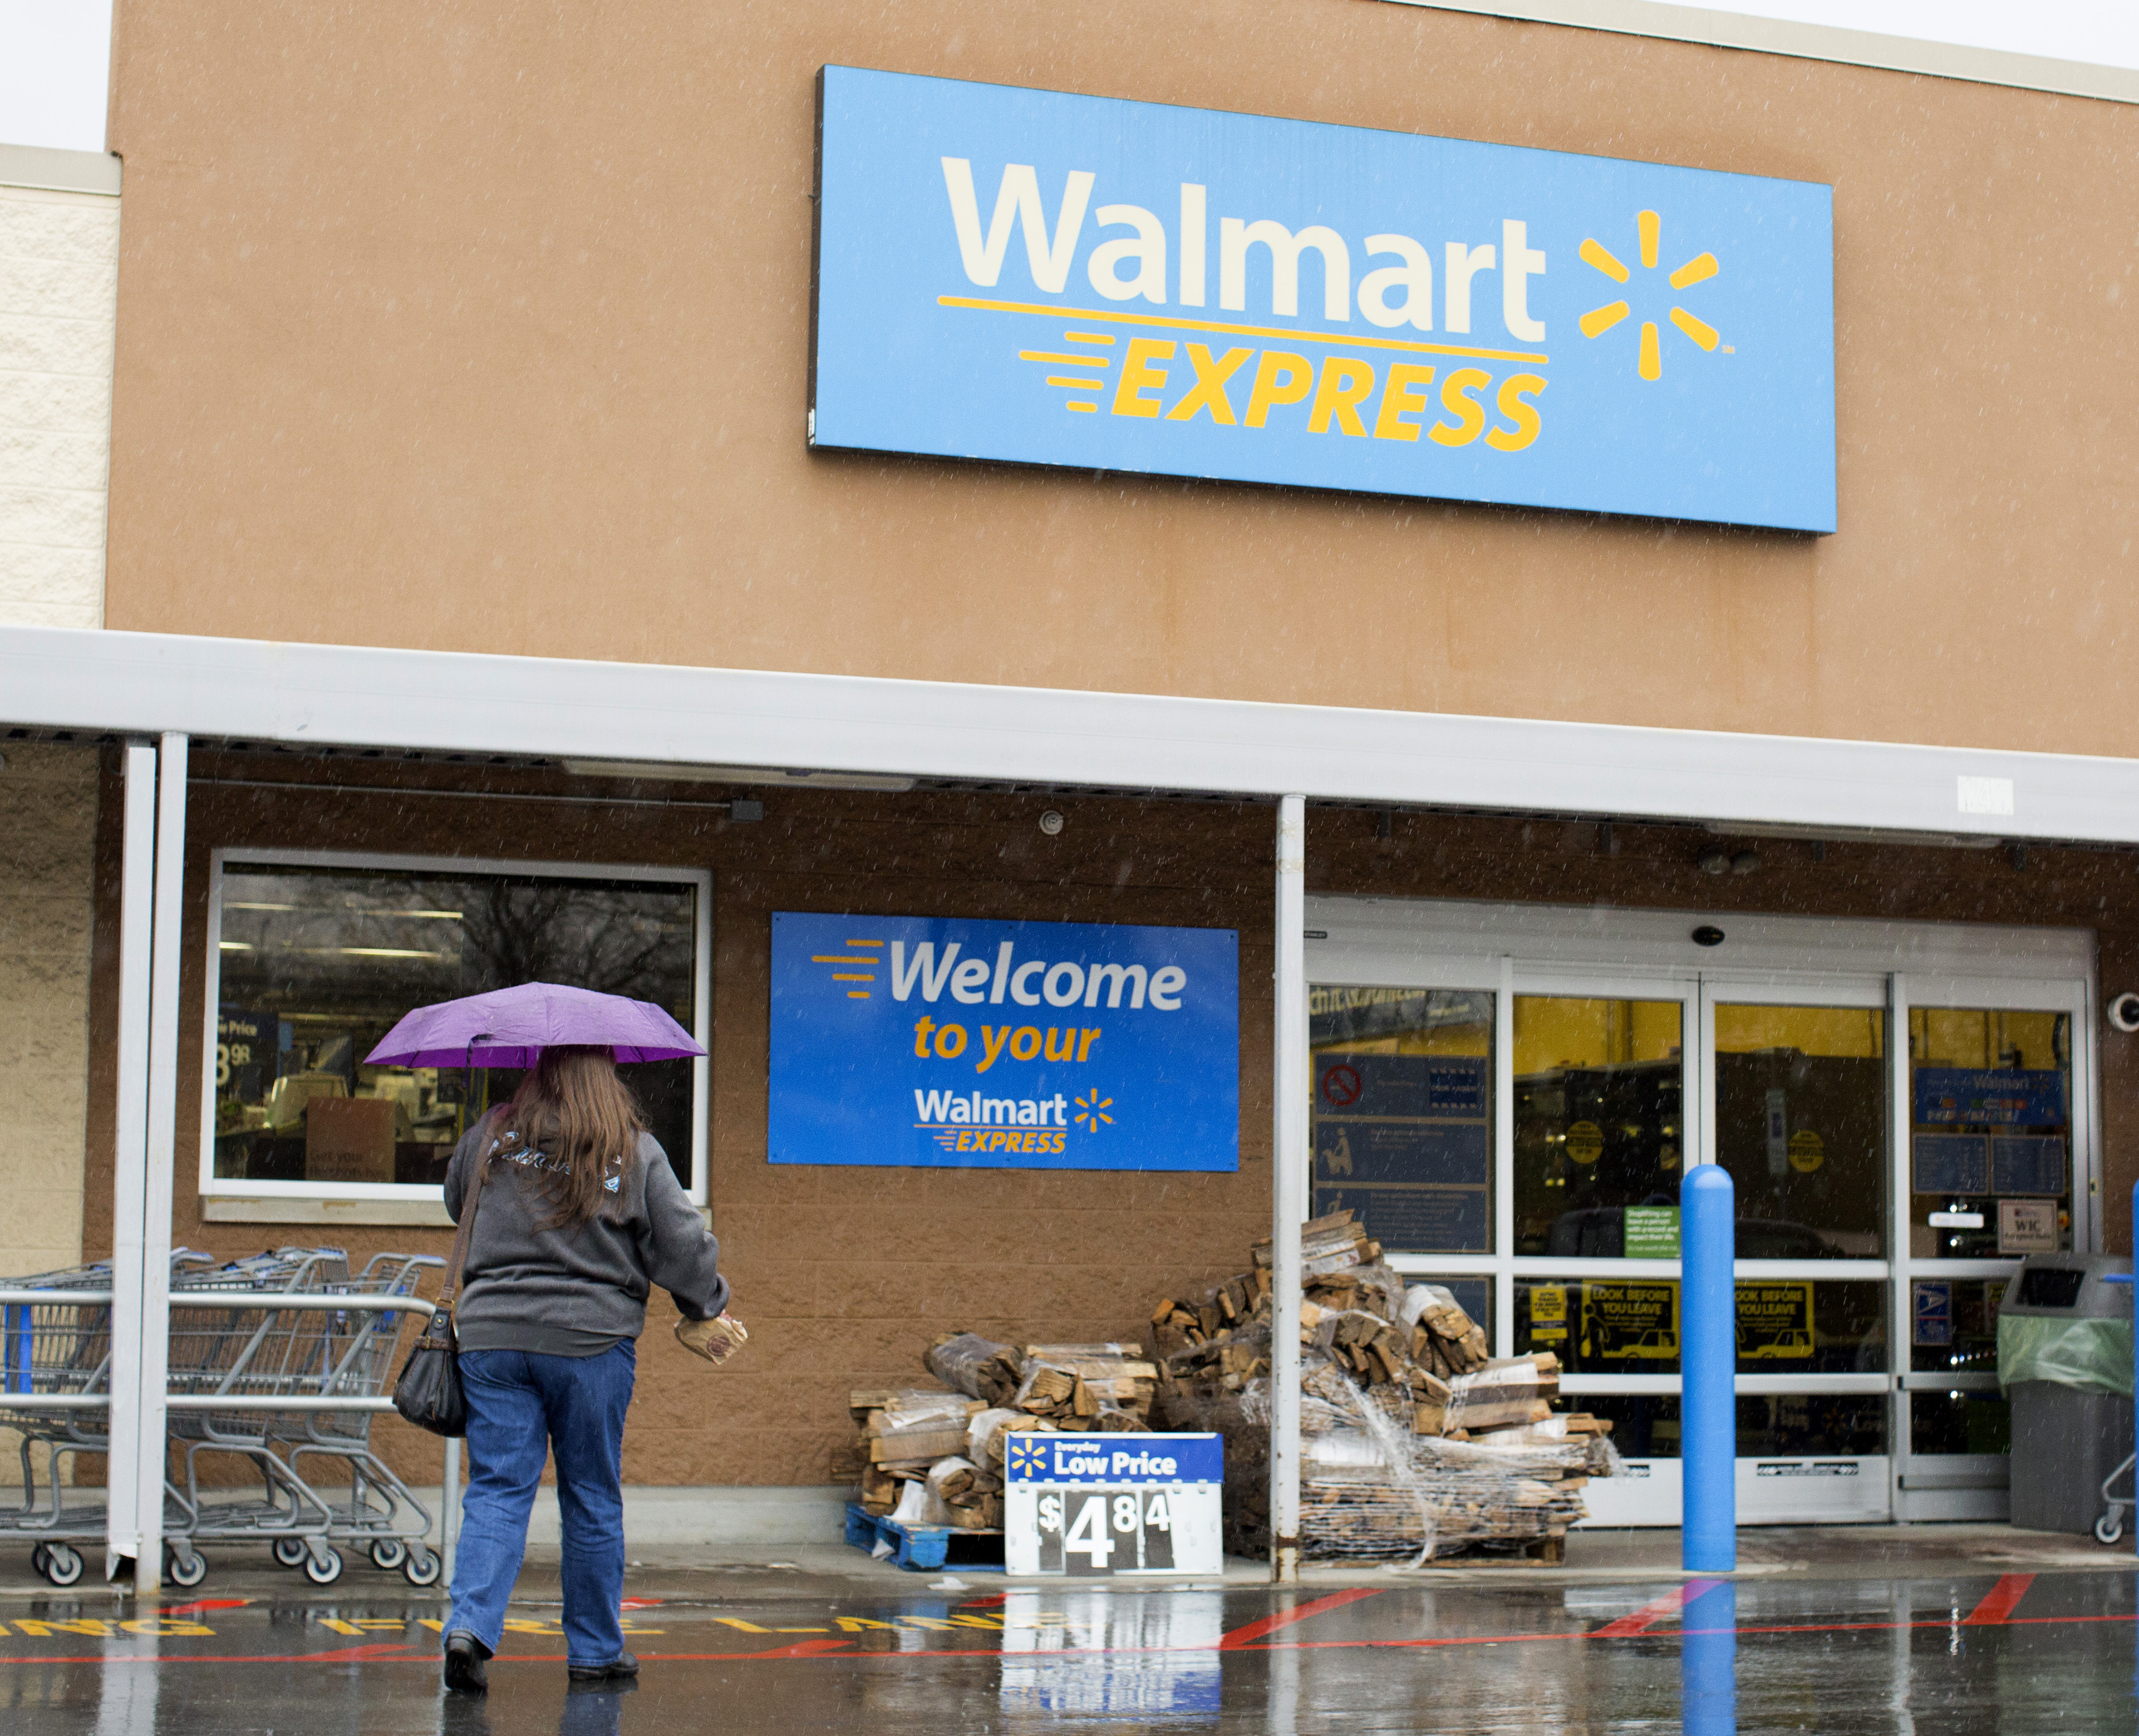 Why Walmart Express Failed